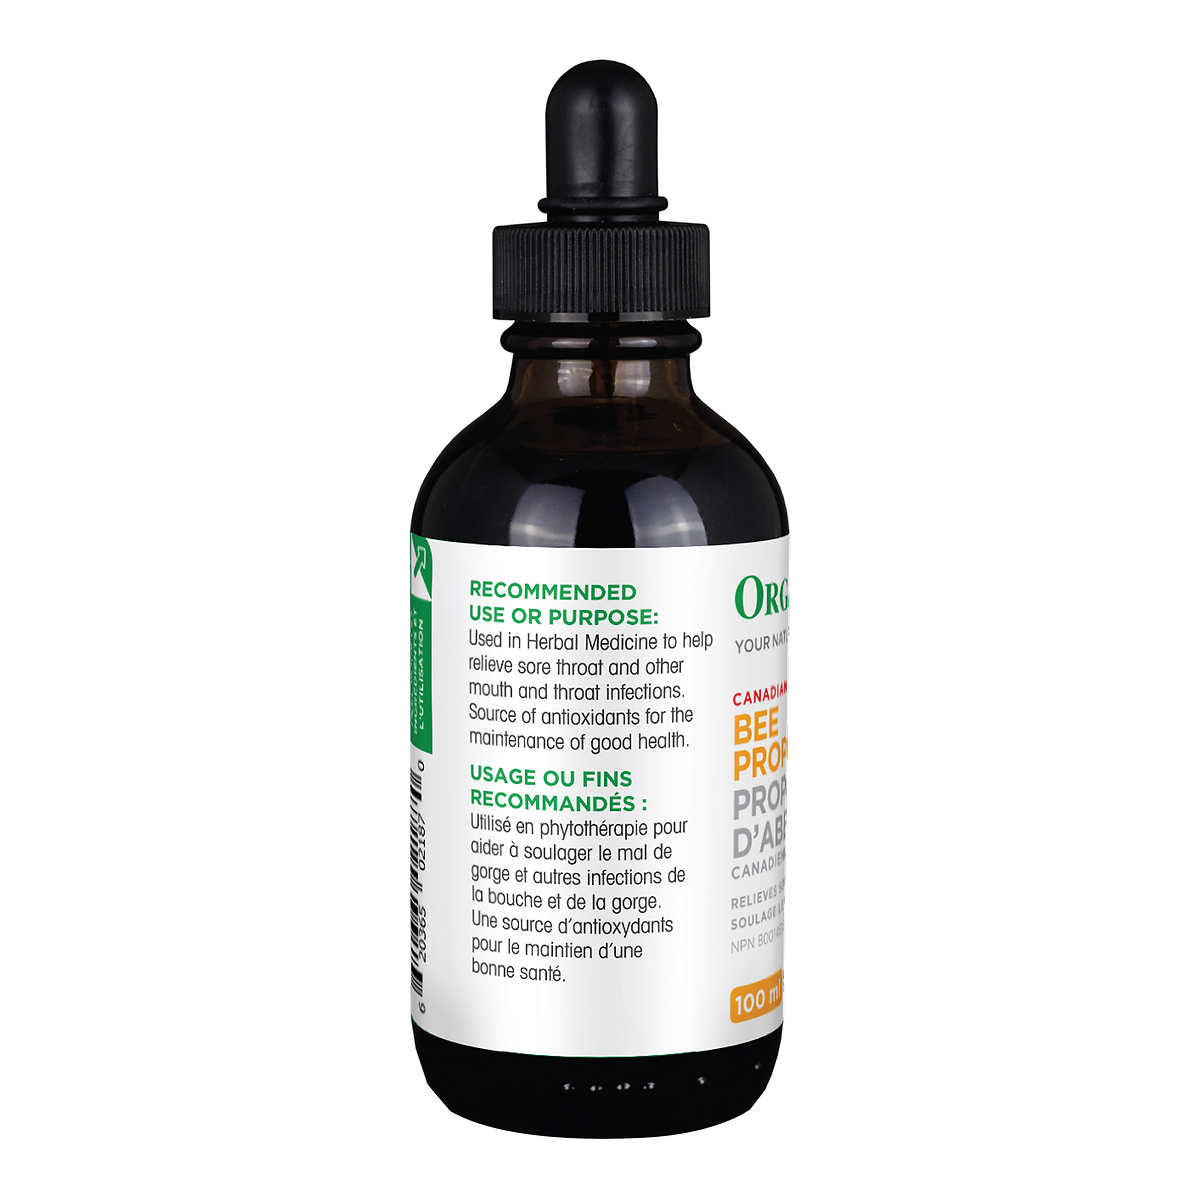 Organika Bee Propolis 167 mg Liquid, 100 ml - canavitam